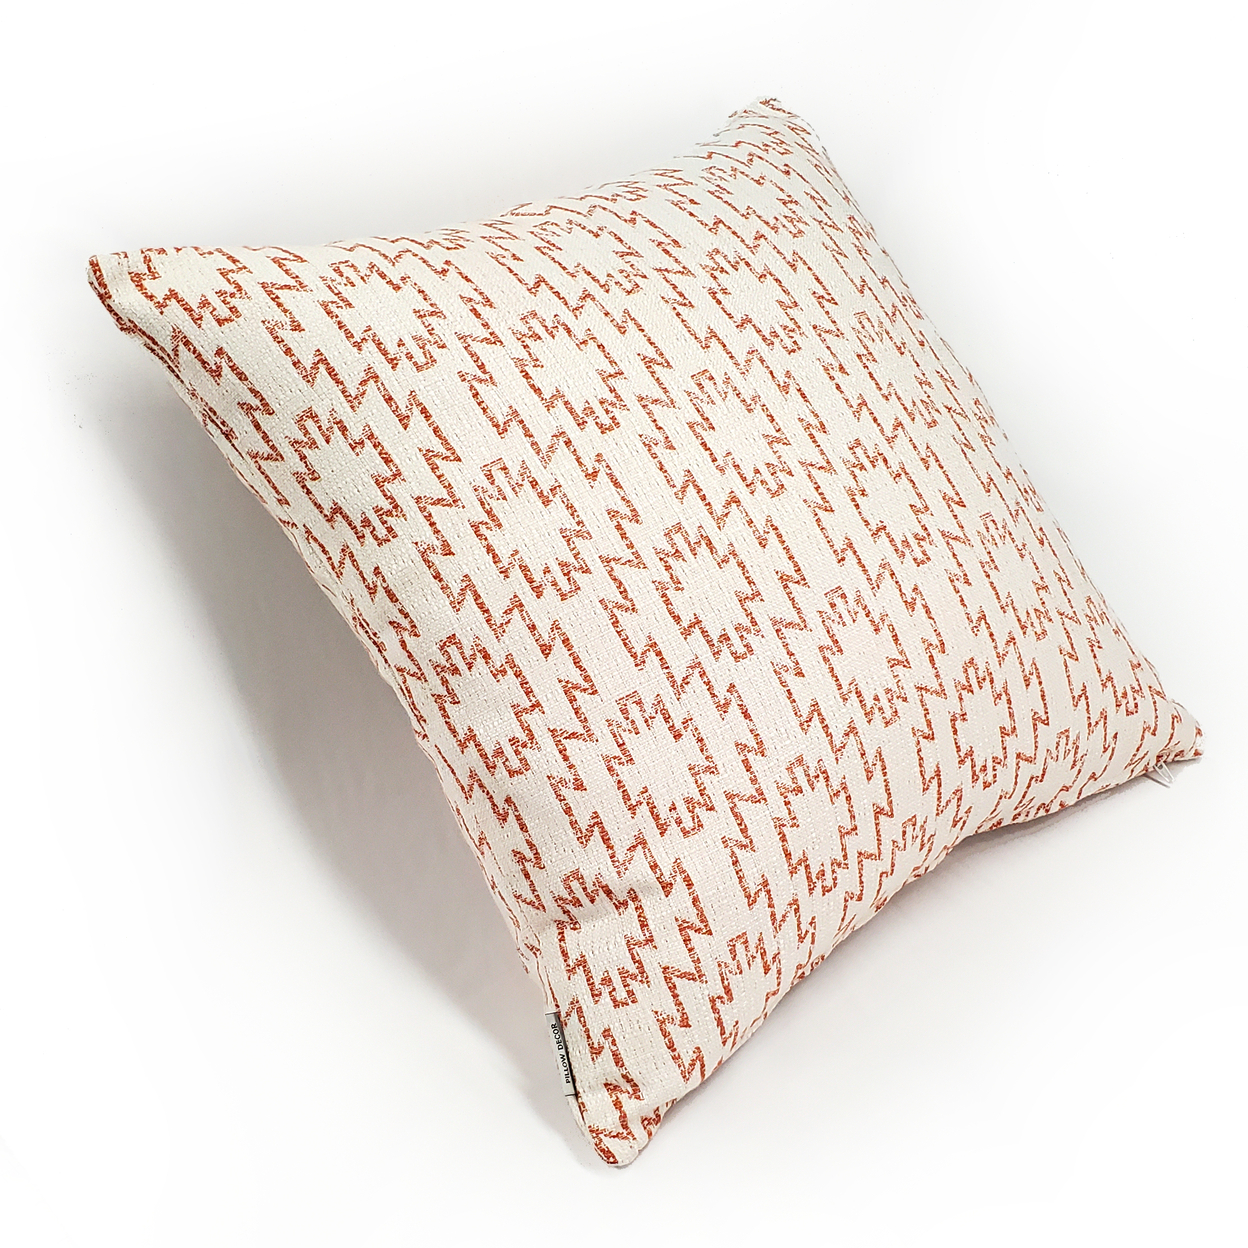 Mirador Rosa Geometric Outdoor Pillow 19x19, With Polyfill Insert